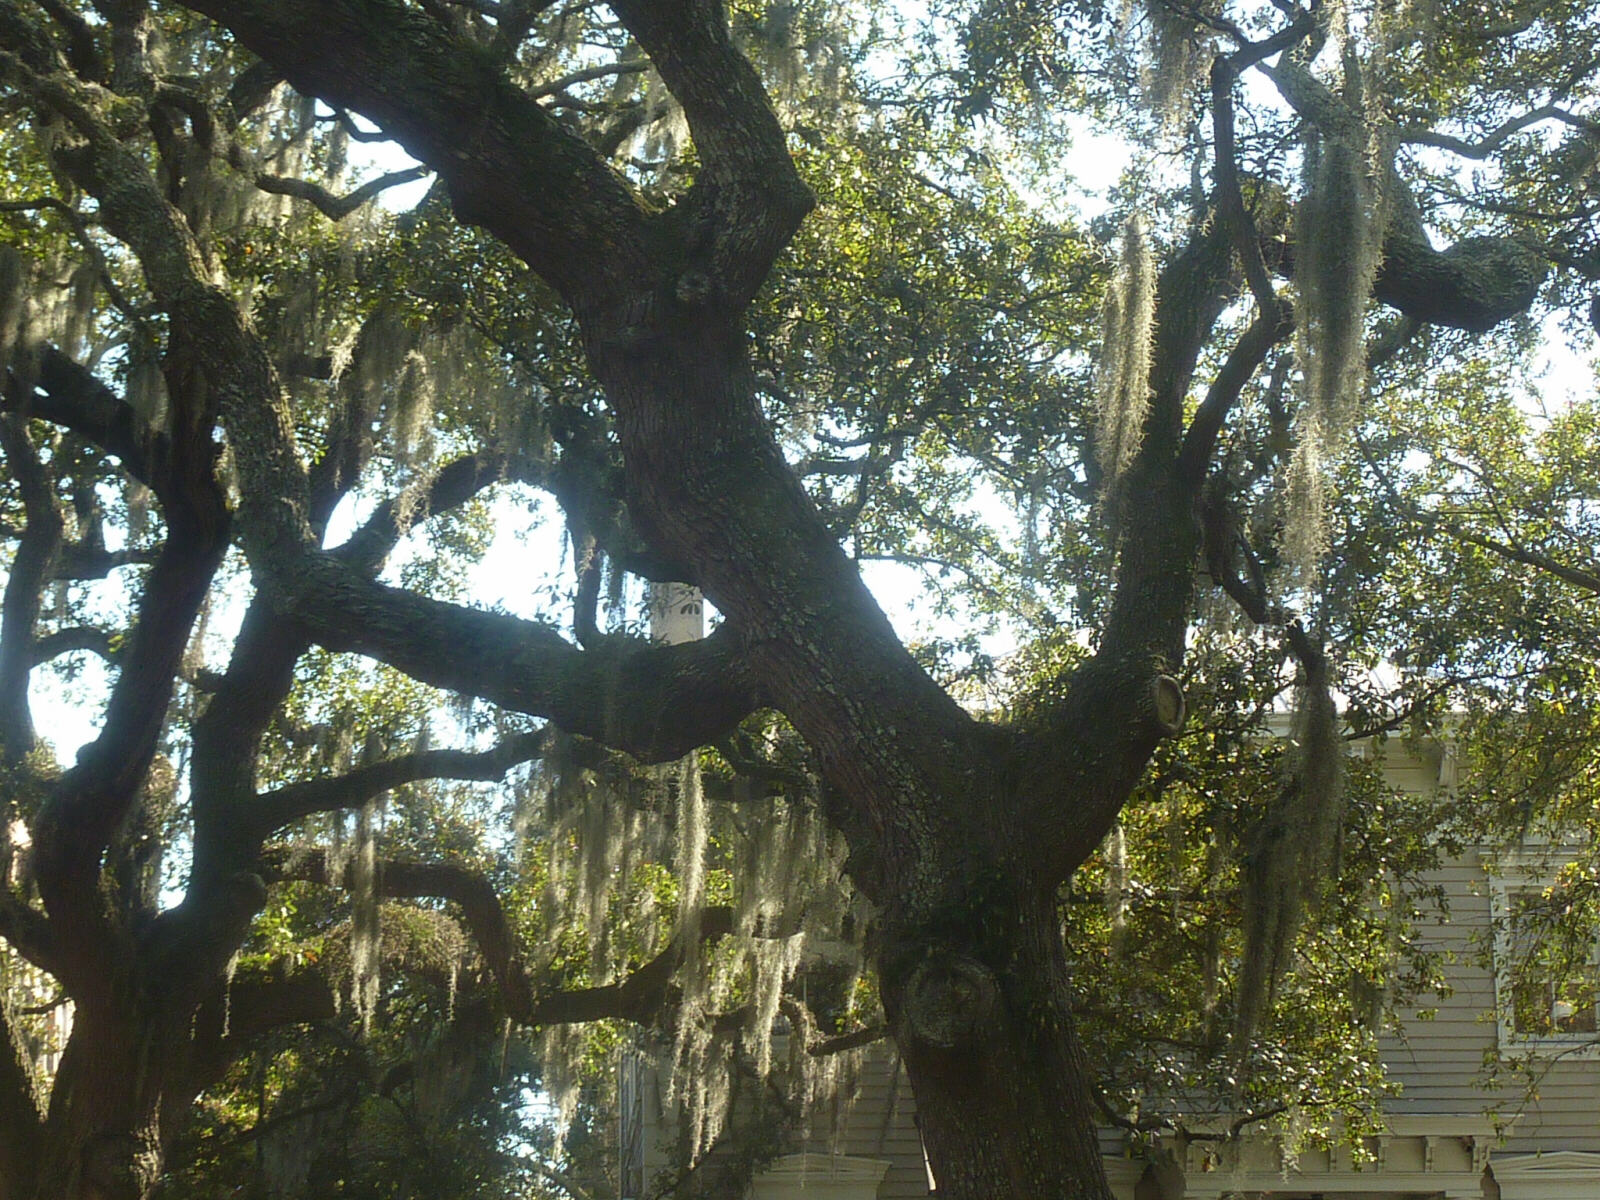 Trees with Spanish moss in Savannah, Georgia